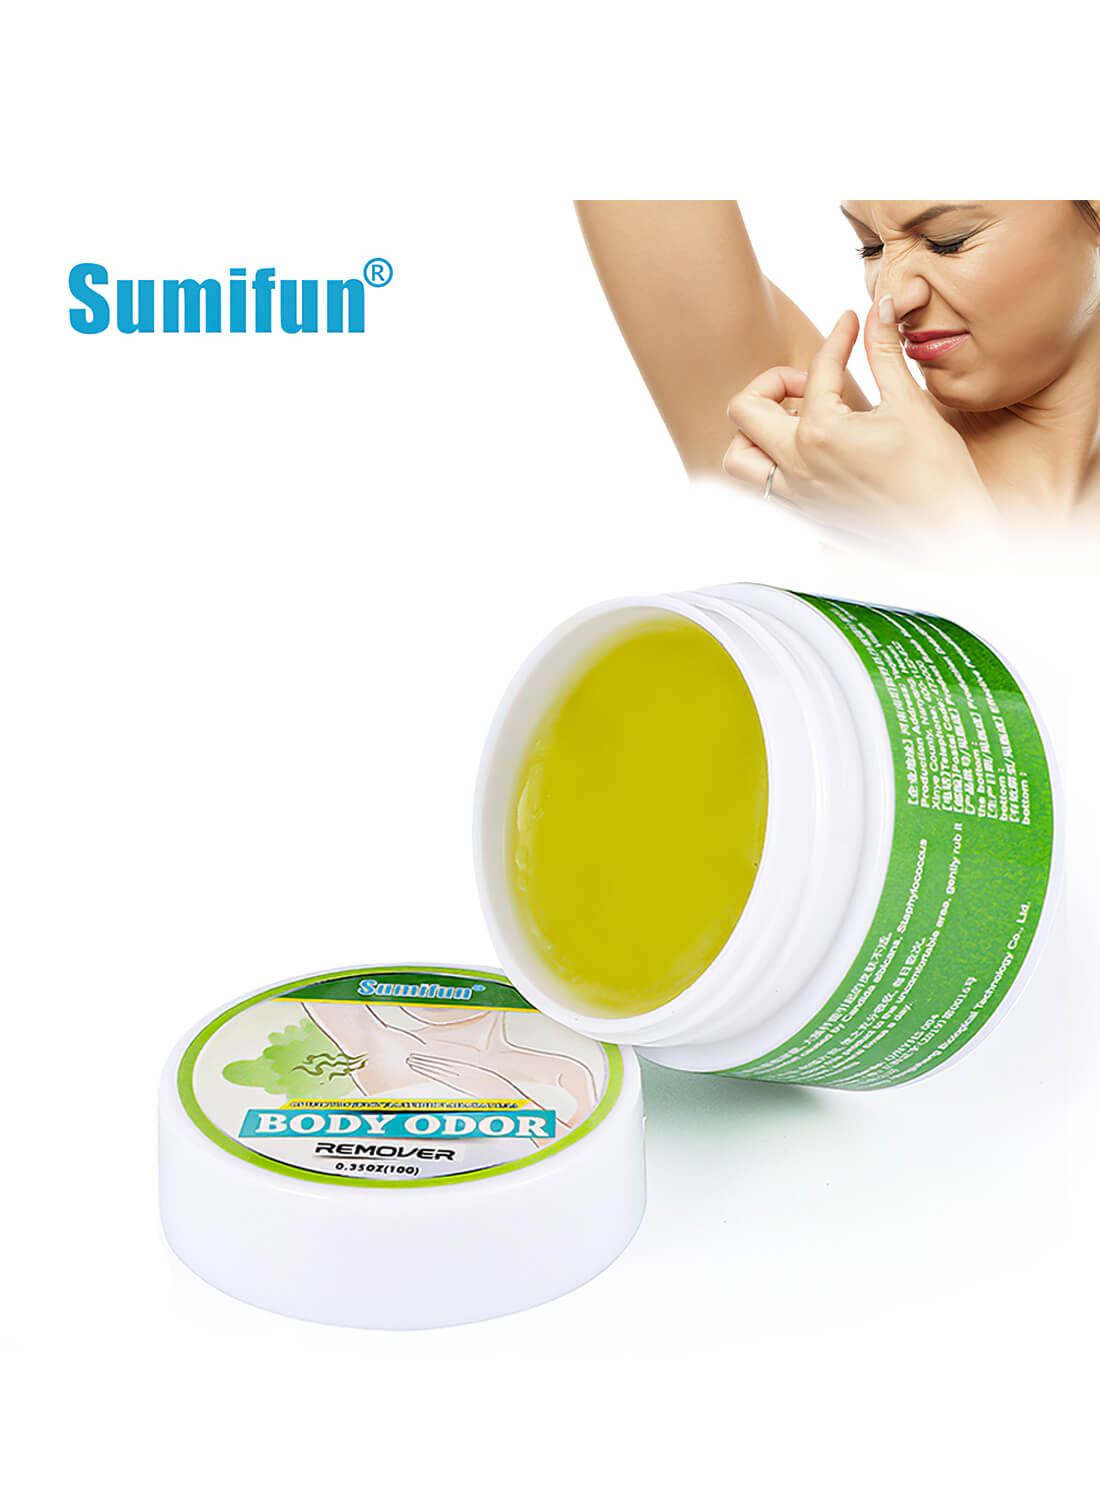 Sumifun Body Odor Remover 10g